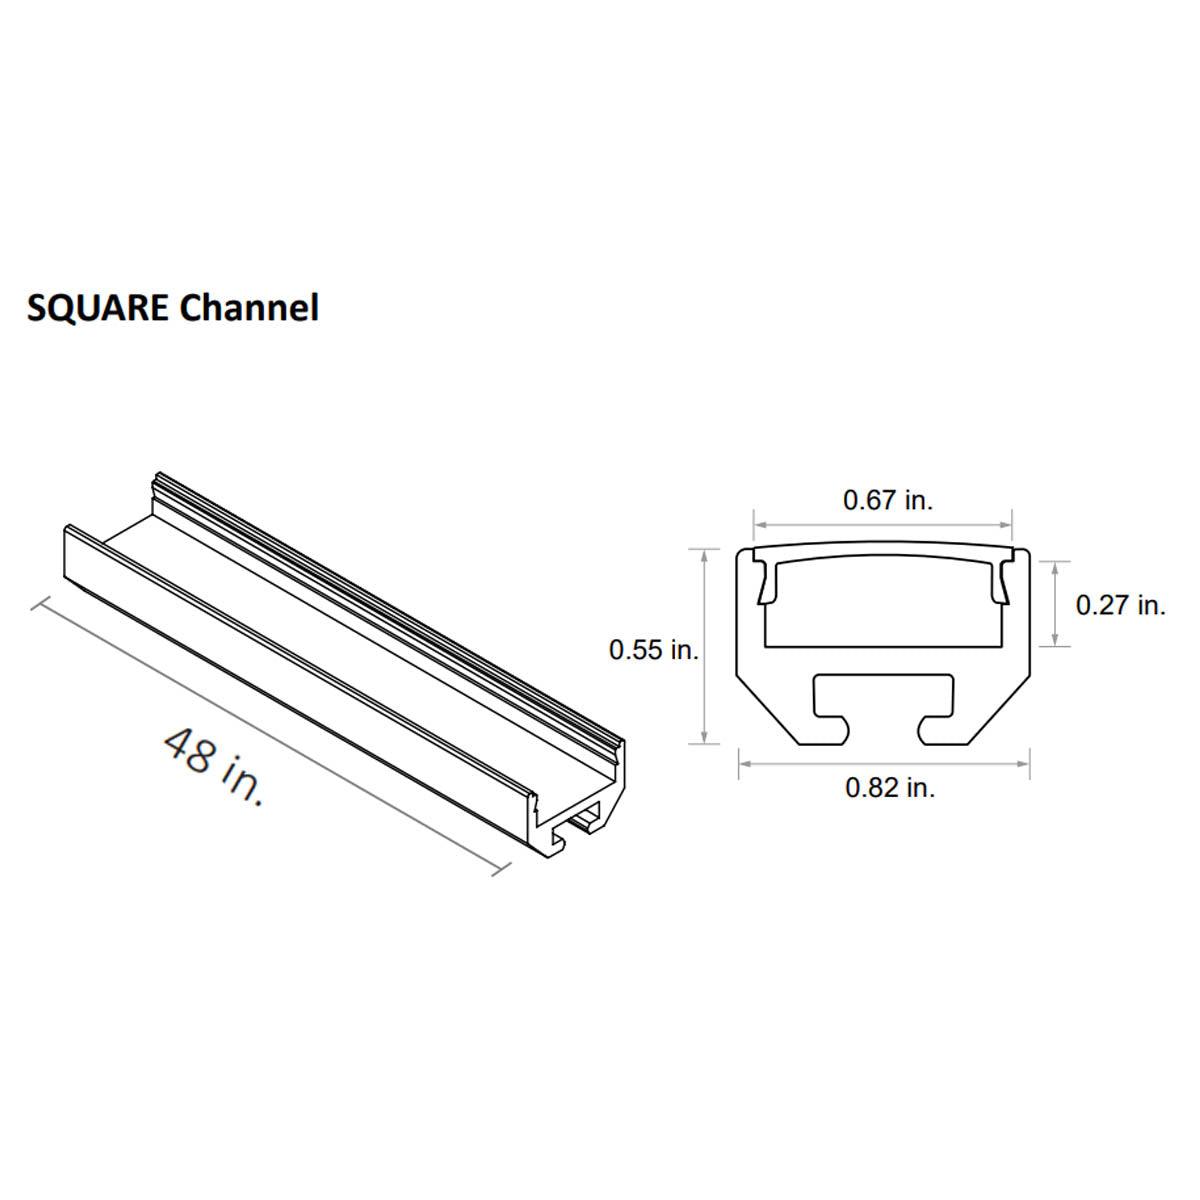 48in. Chromapath Builder, Square Black LED Channels for 12mm strip lights